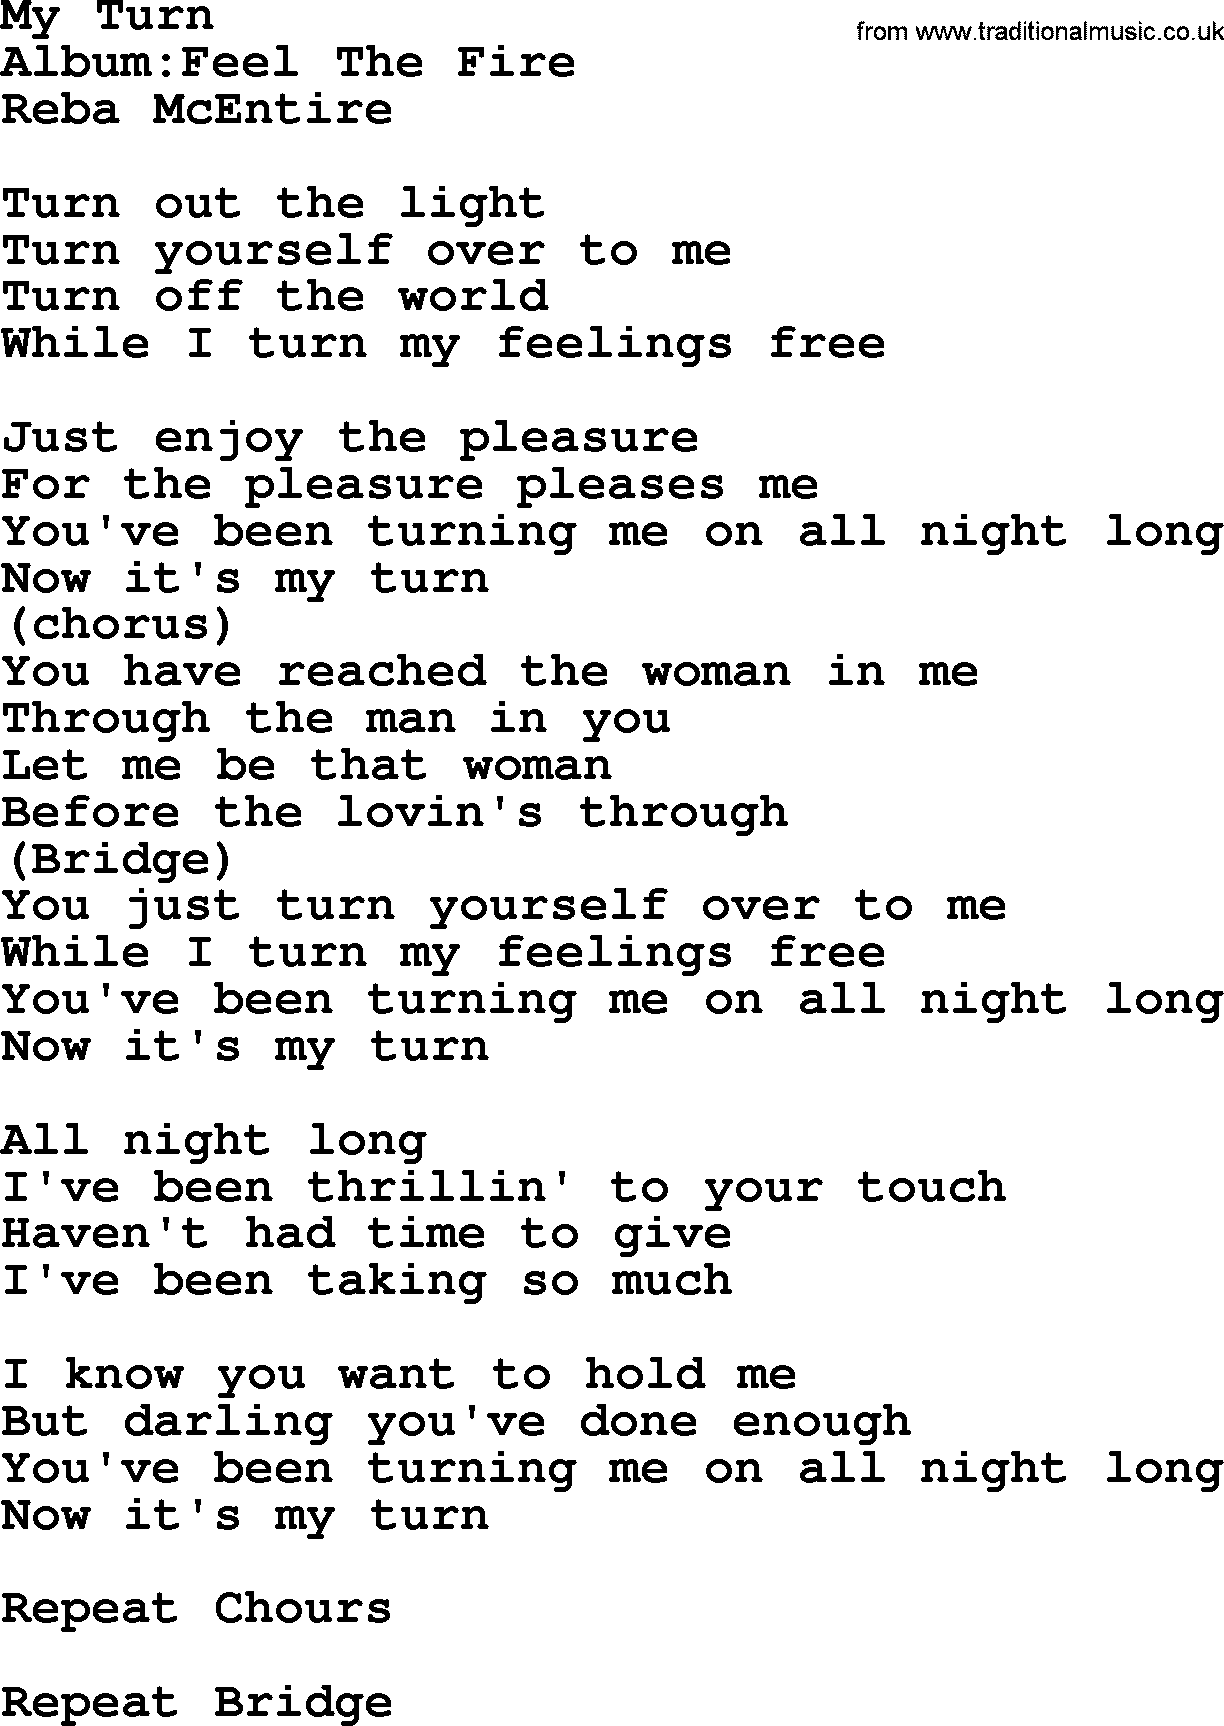 Reba McEntire song: My Turn lyrics